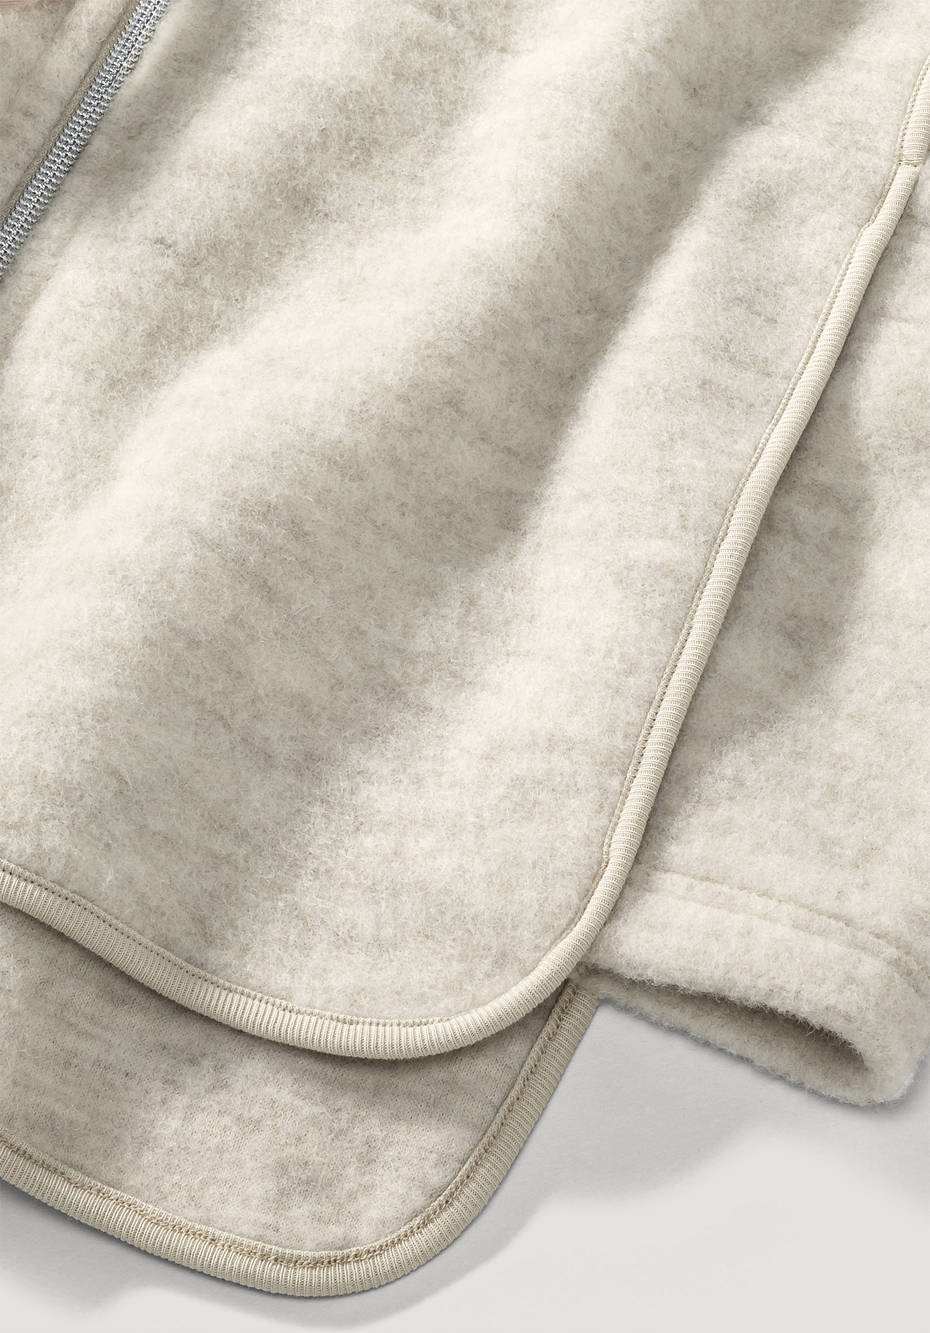 Wool fleece hooded vest made from pure organic merino wool